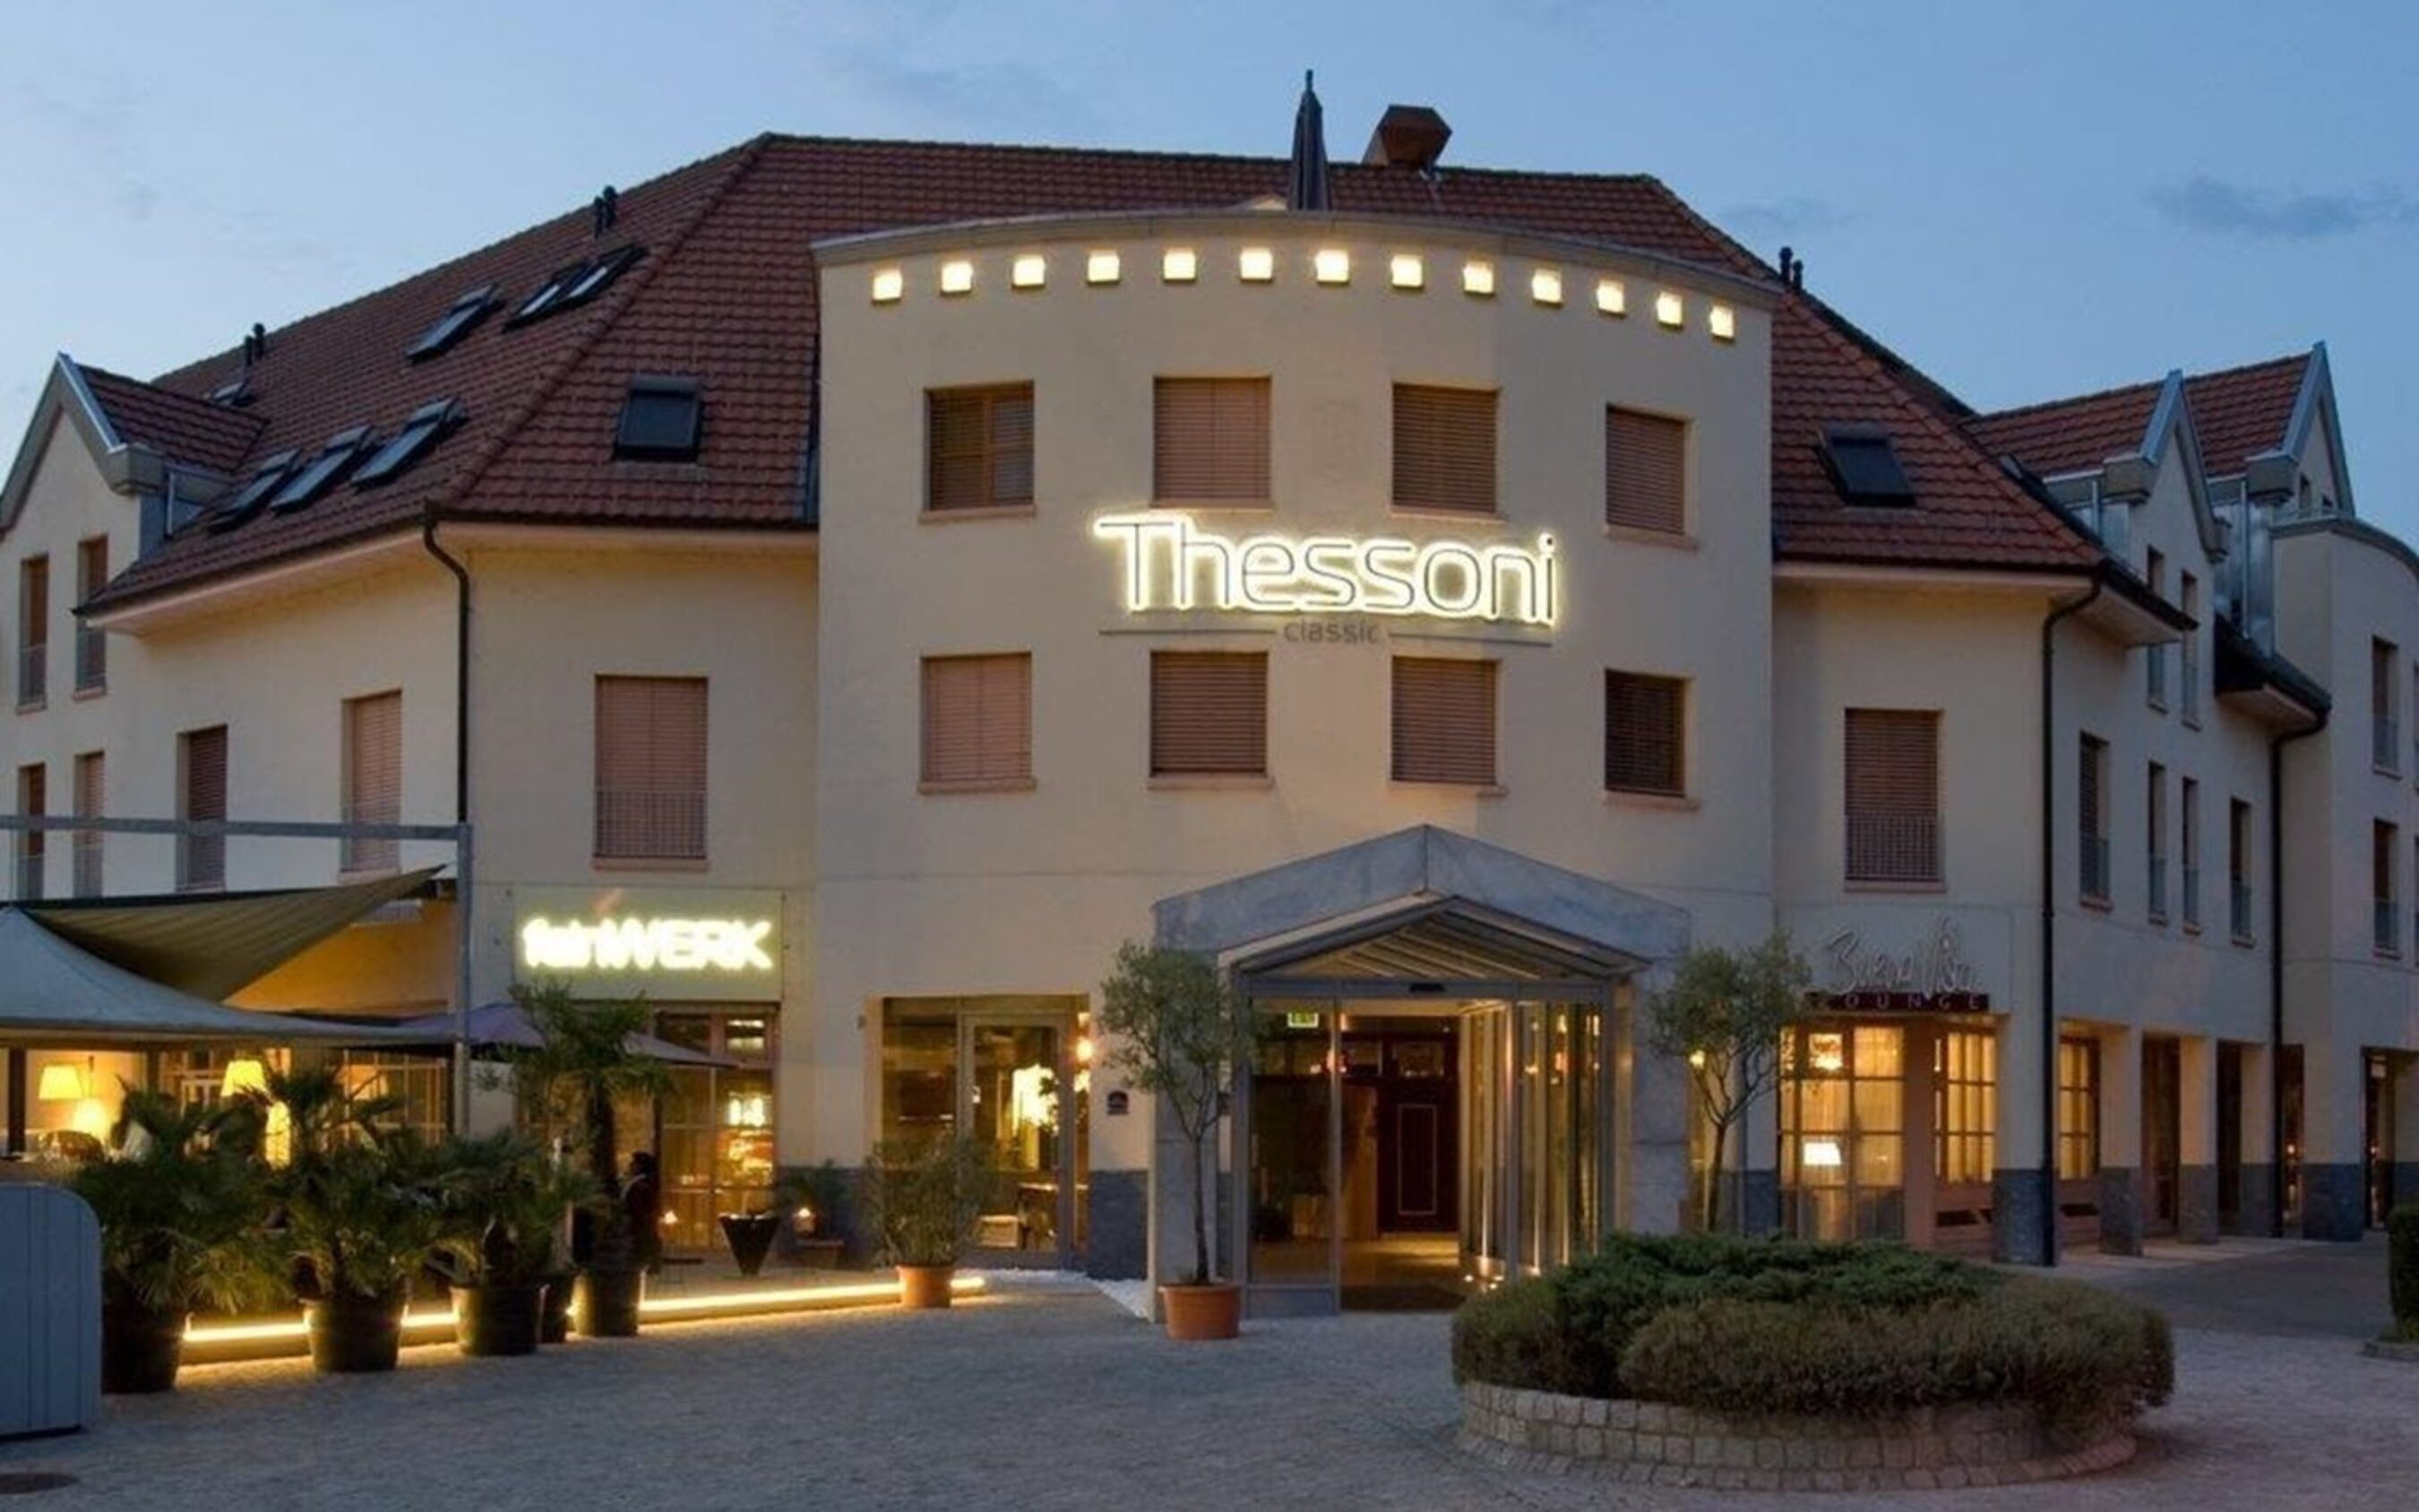 Regensdorf Hotel Thessoni classic Aussenansicht